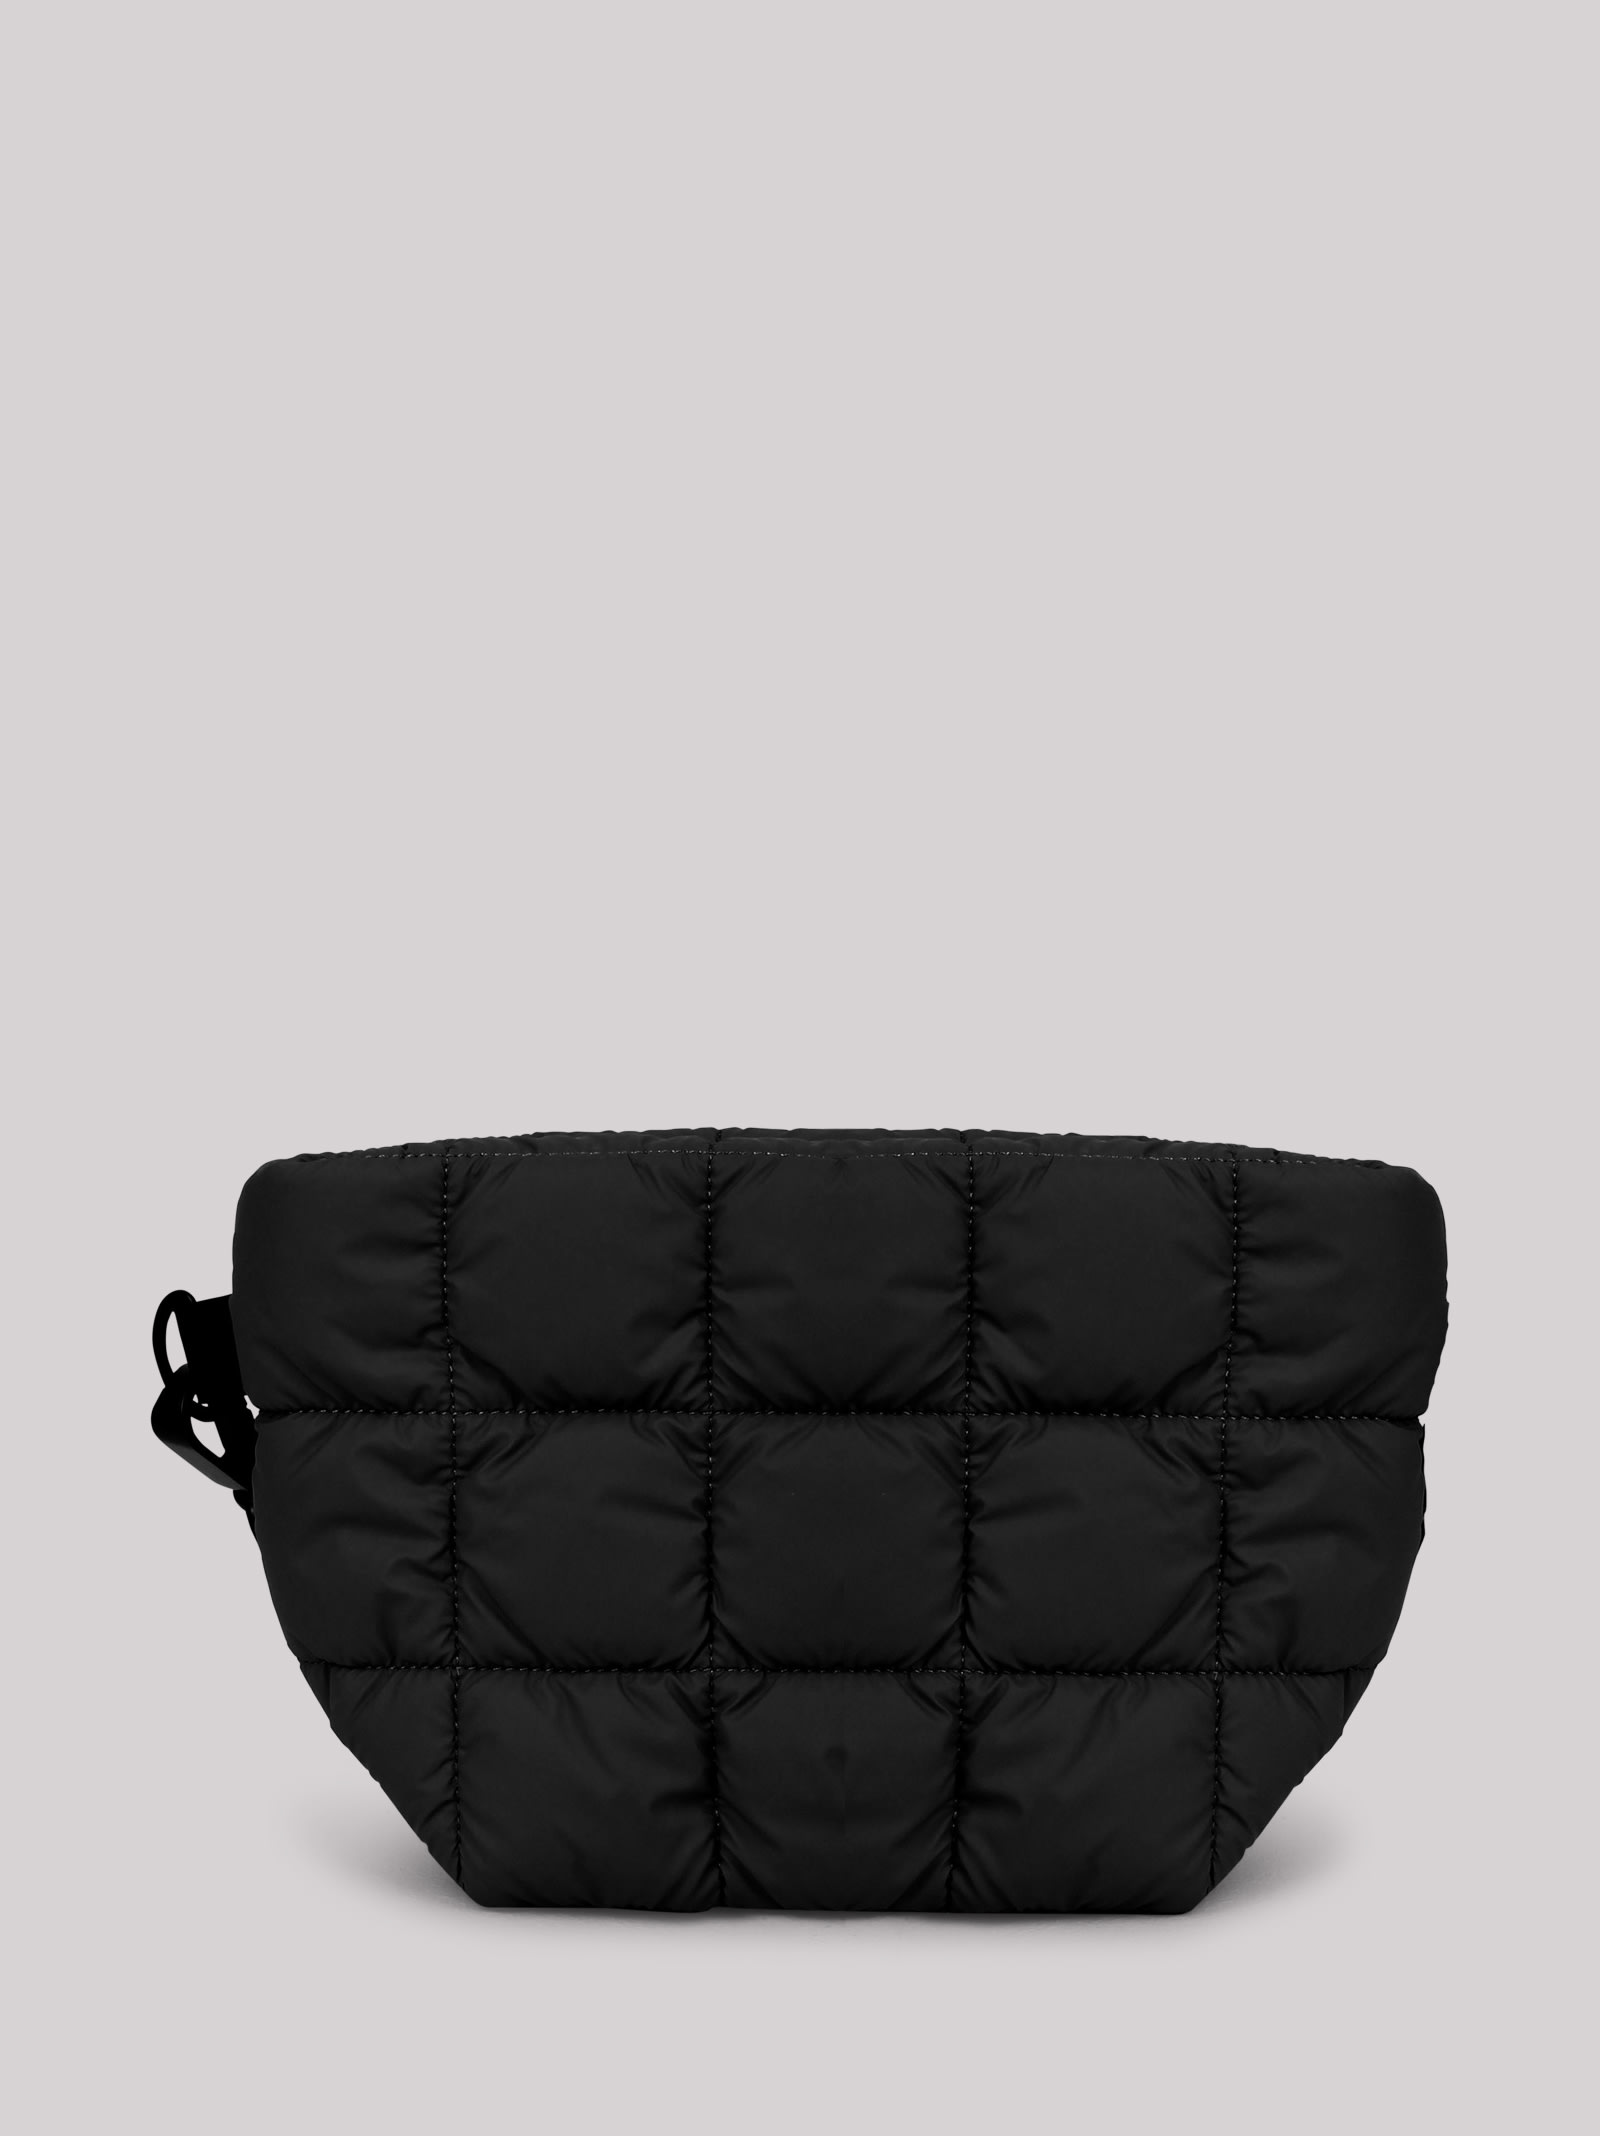 Shop Veecollective Vee Collective Mini Porter Quilted Shoulder Bag